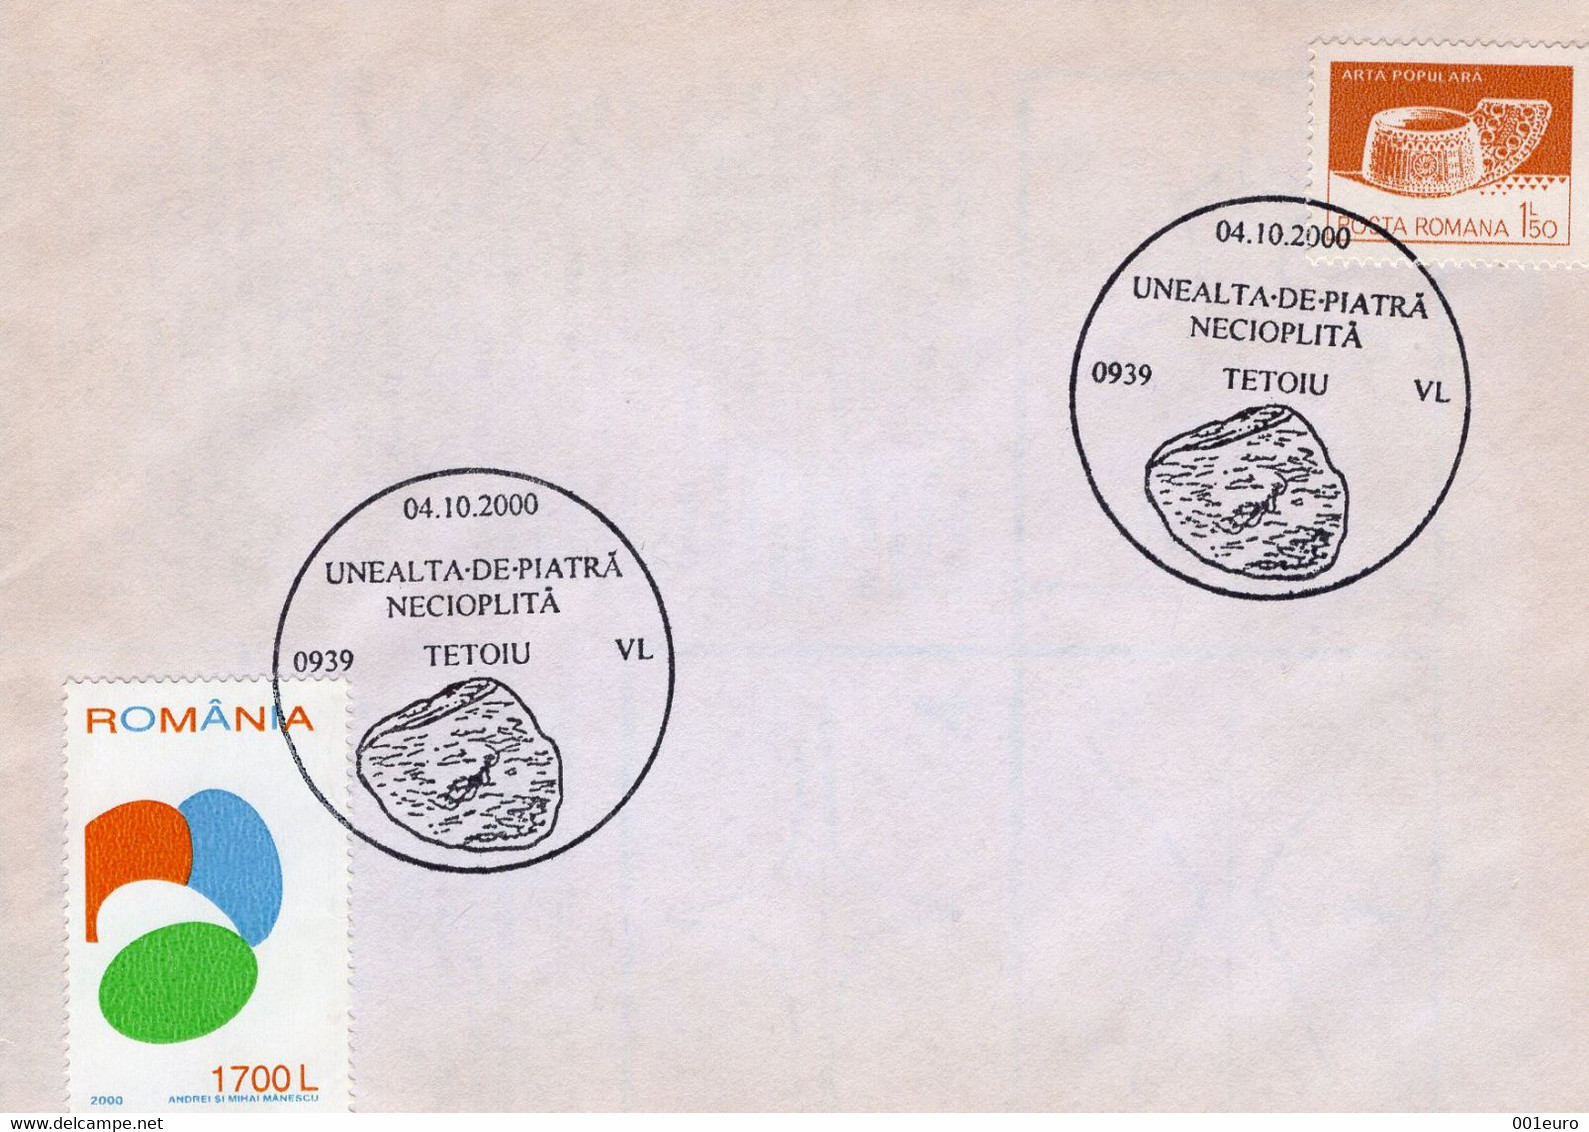 ROMANIA 2000: STONE AGE TOOL Illustrated Postmark - Registered Shipping! - Marcofilia